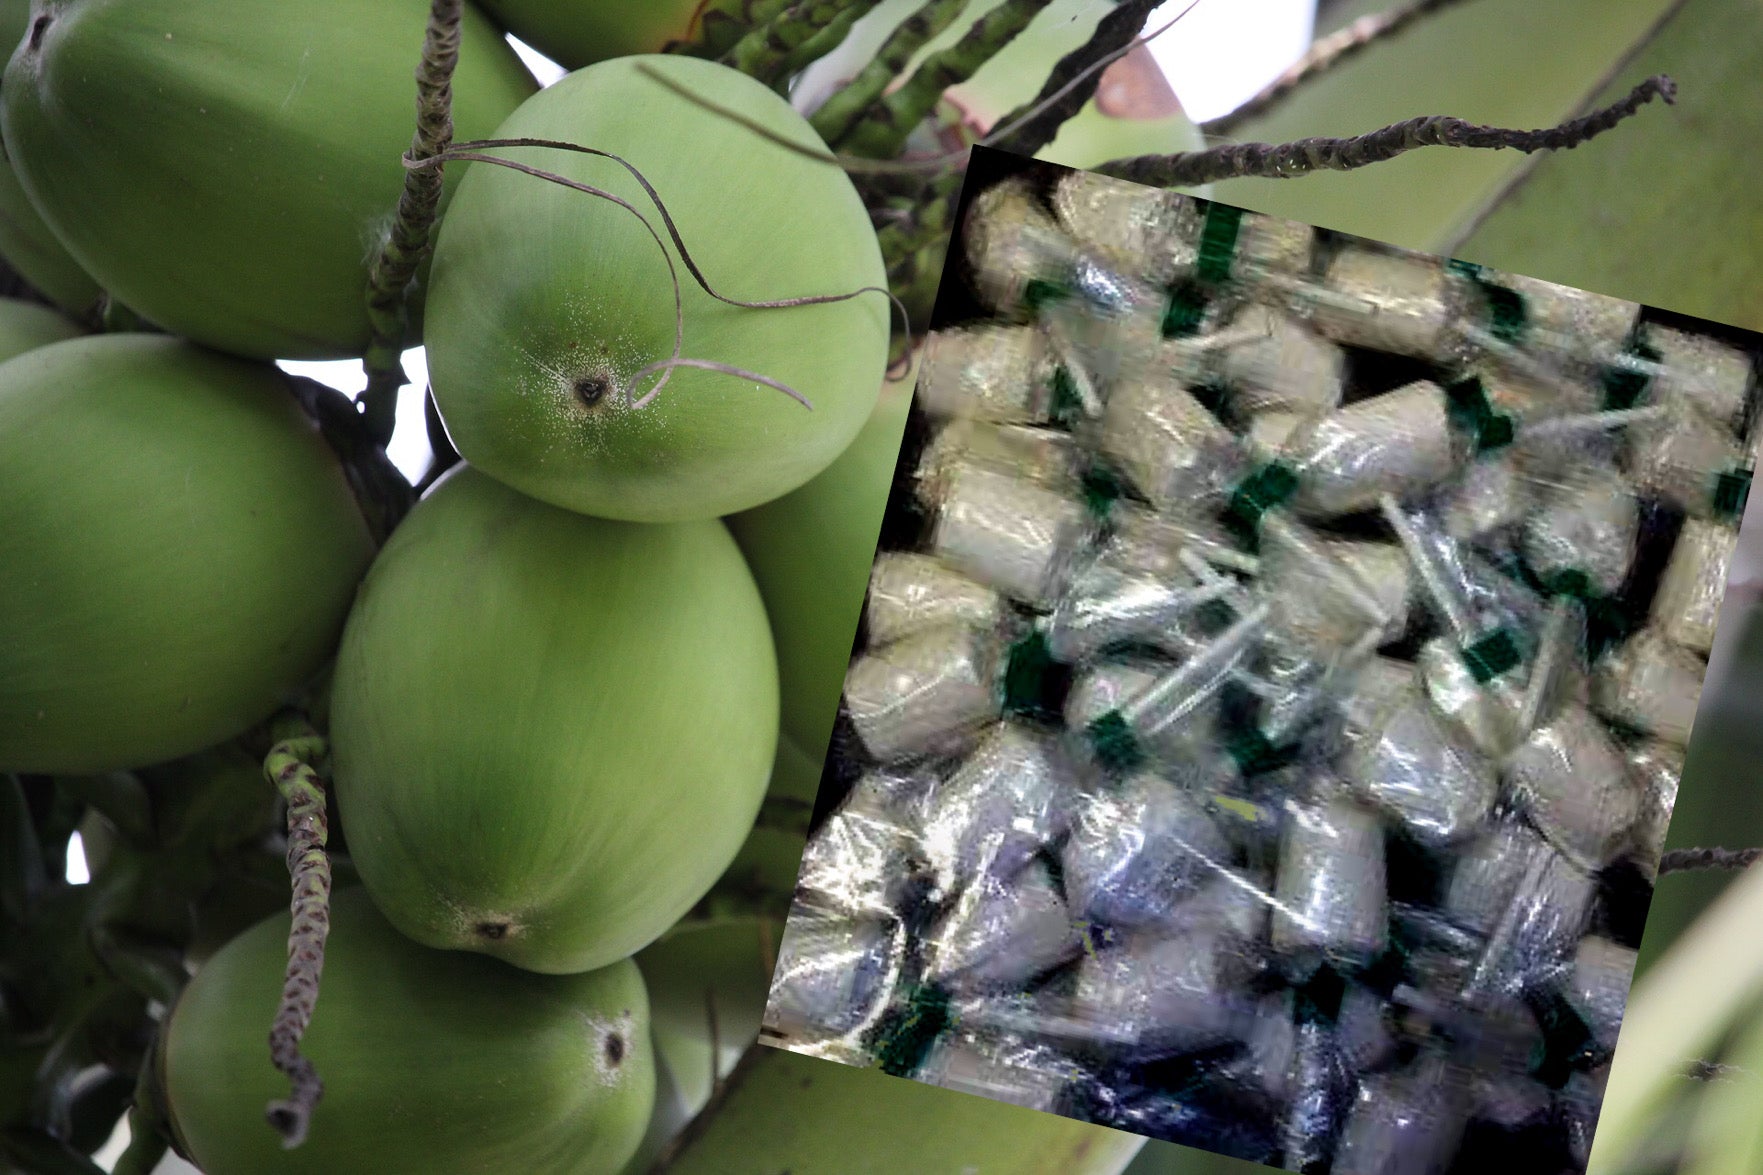 Coconut Lollipops (Pilones de Coco)